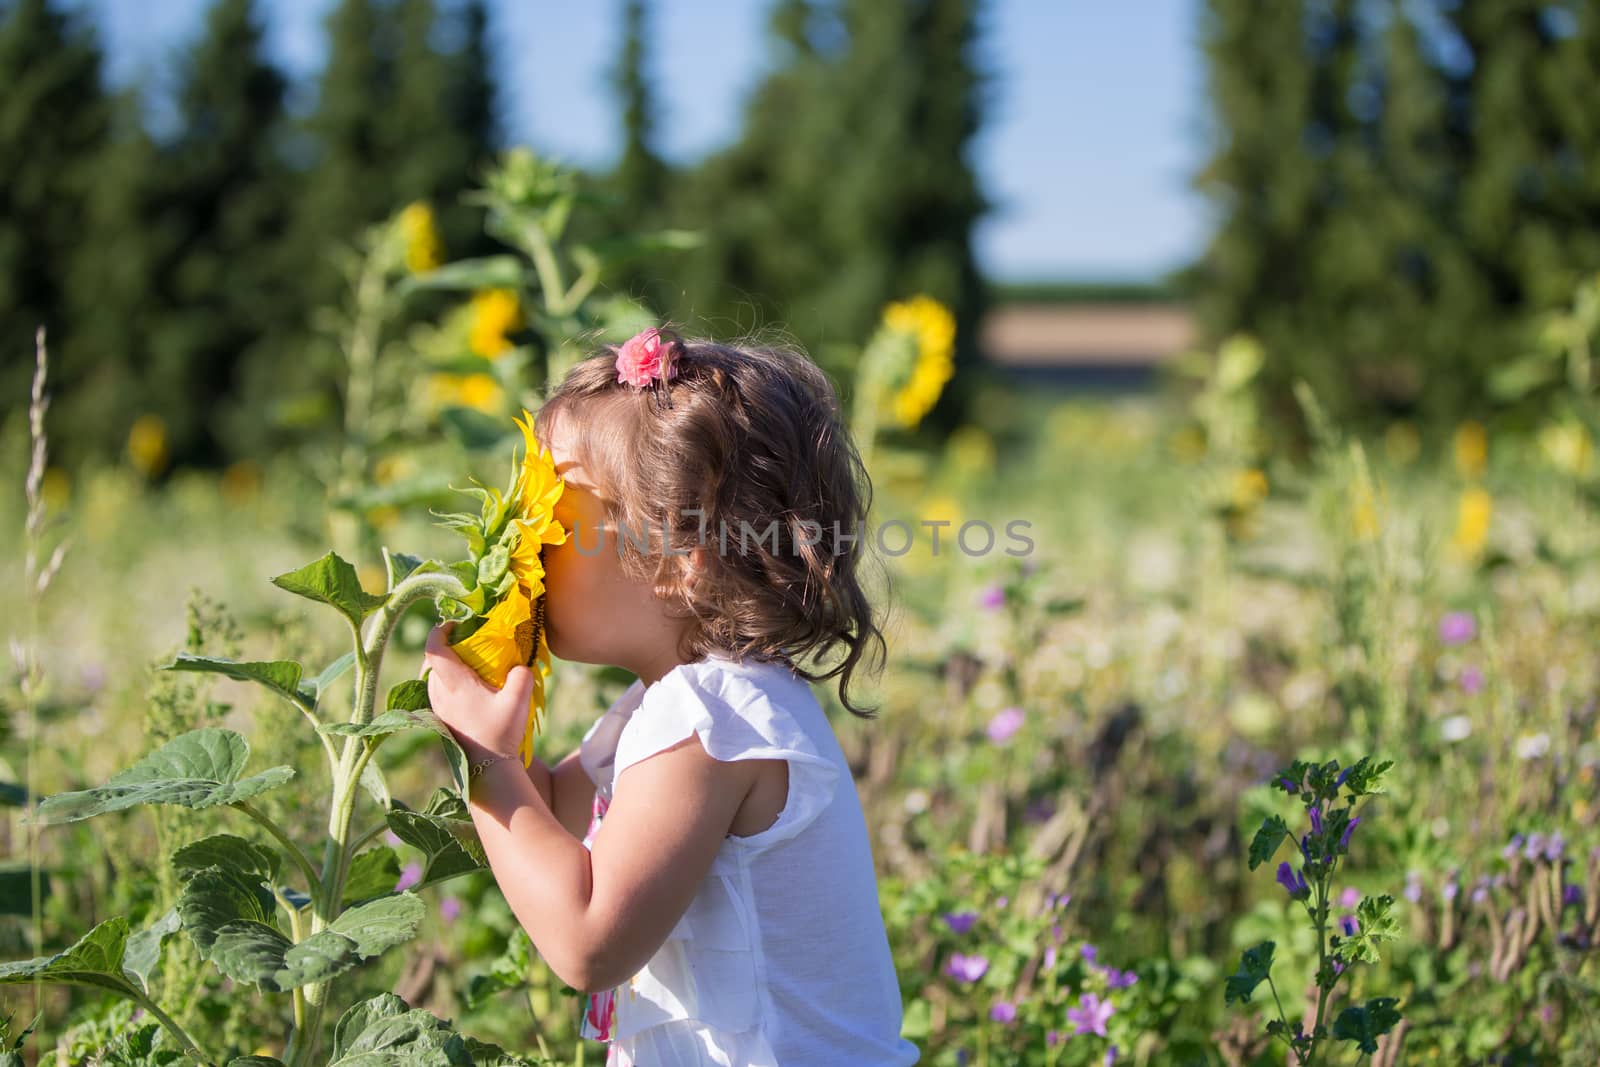 One little girl in a field of sunflowers